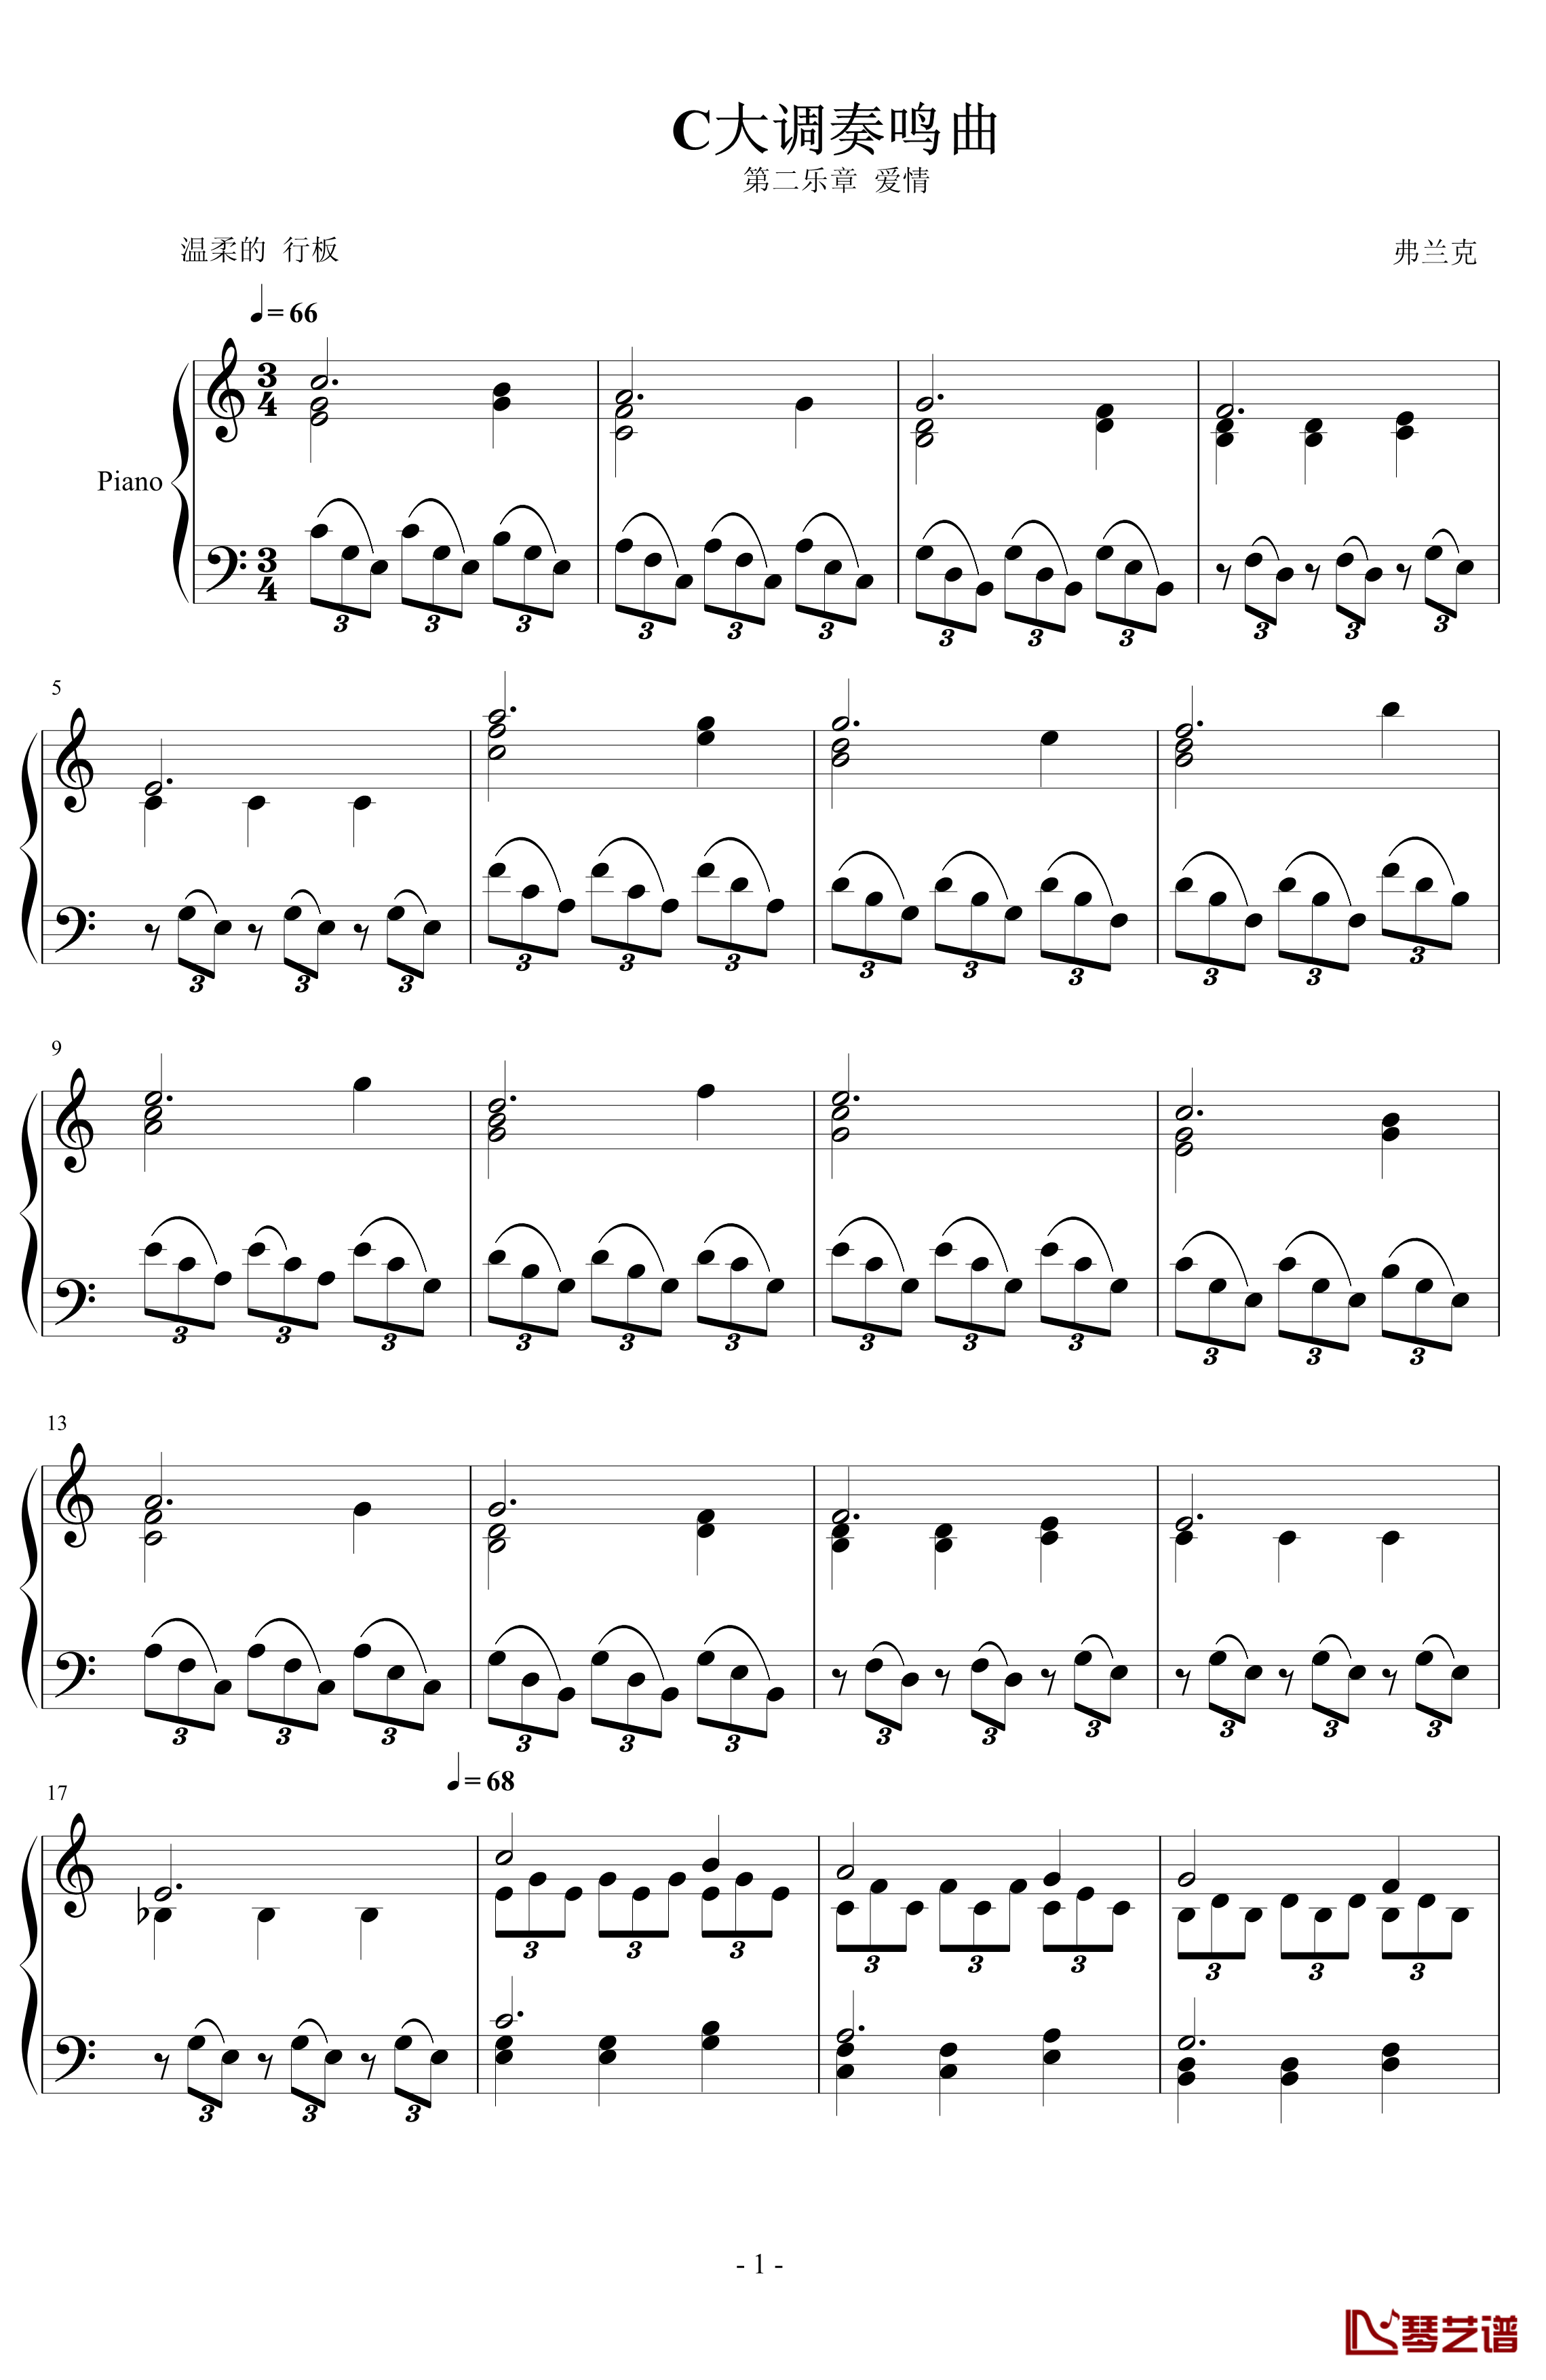 C大调奏鸣曲 第二乐章·爱情·钢琴谱-弗兰克1